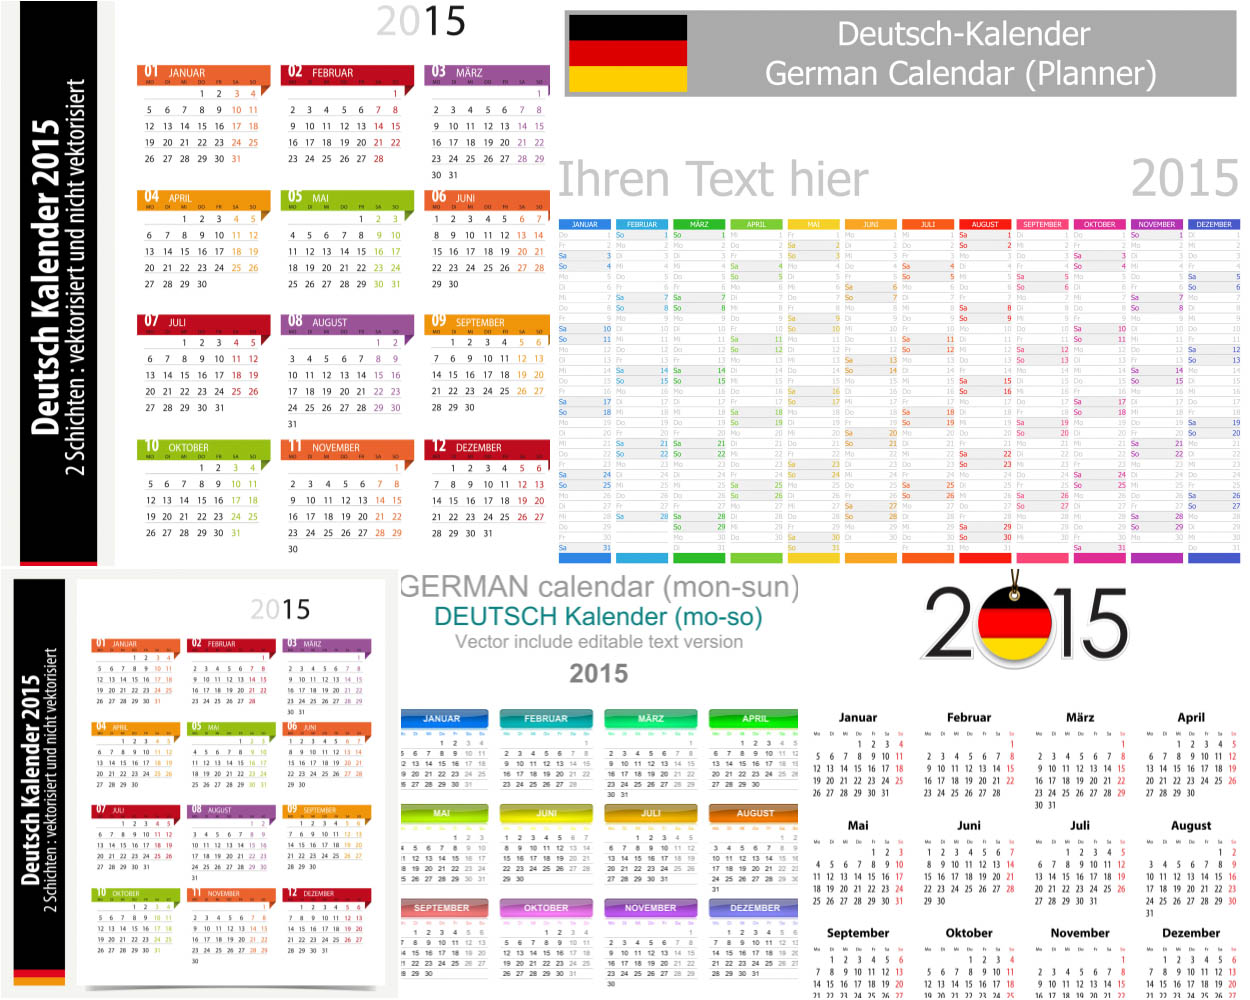 2015 German calendars